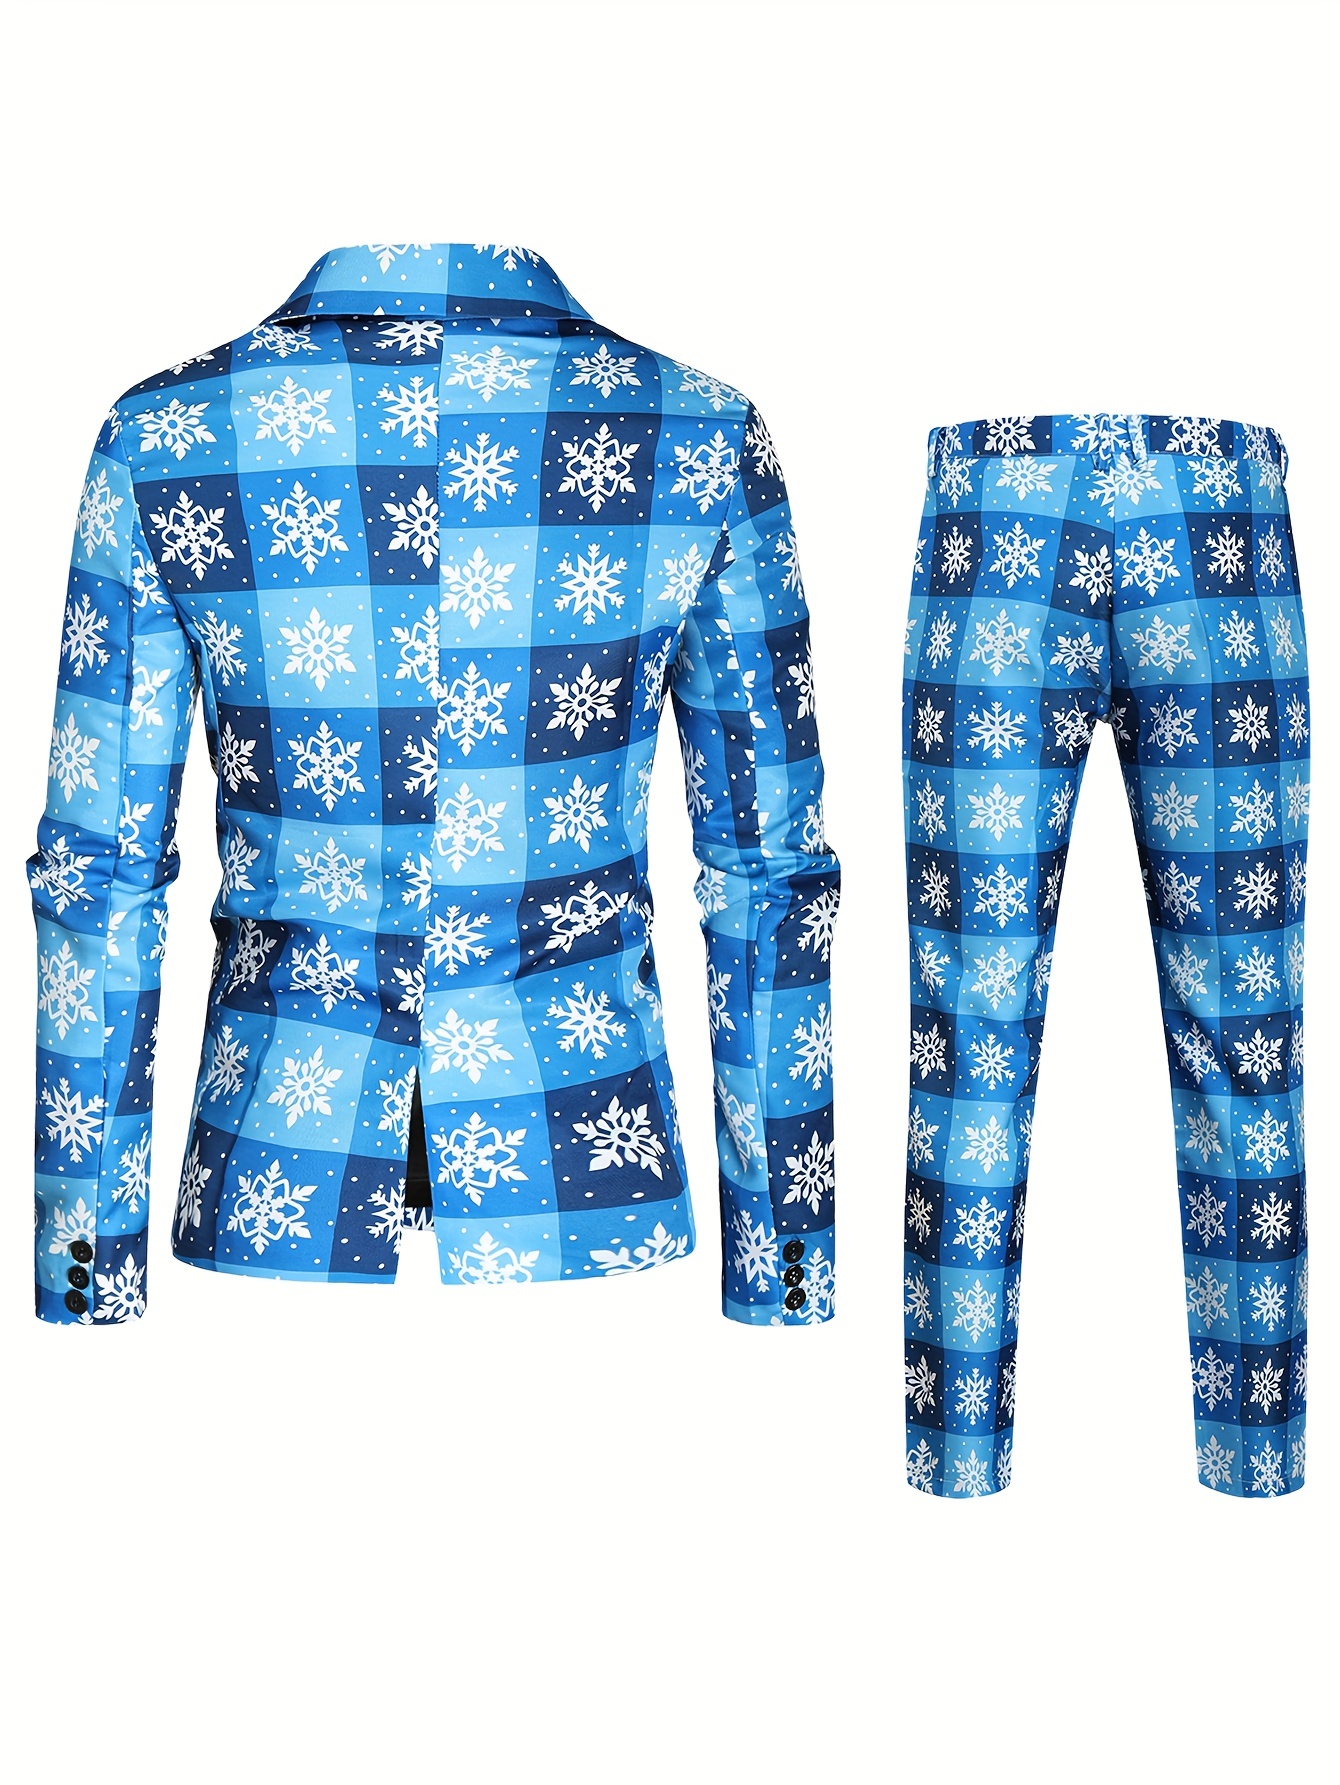 jovati Christmas Suit Jacket MensFashion Christmas Christmas Suit Jacket +  Suit Pants Two-piece Suit 